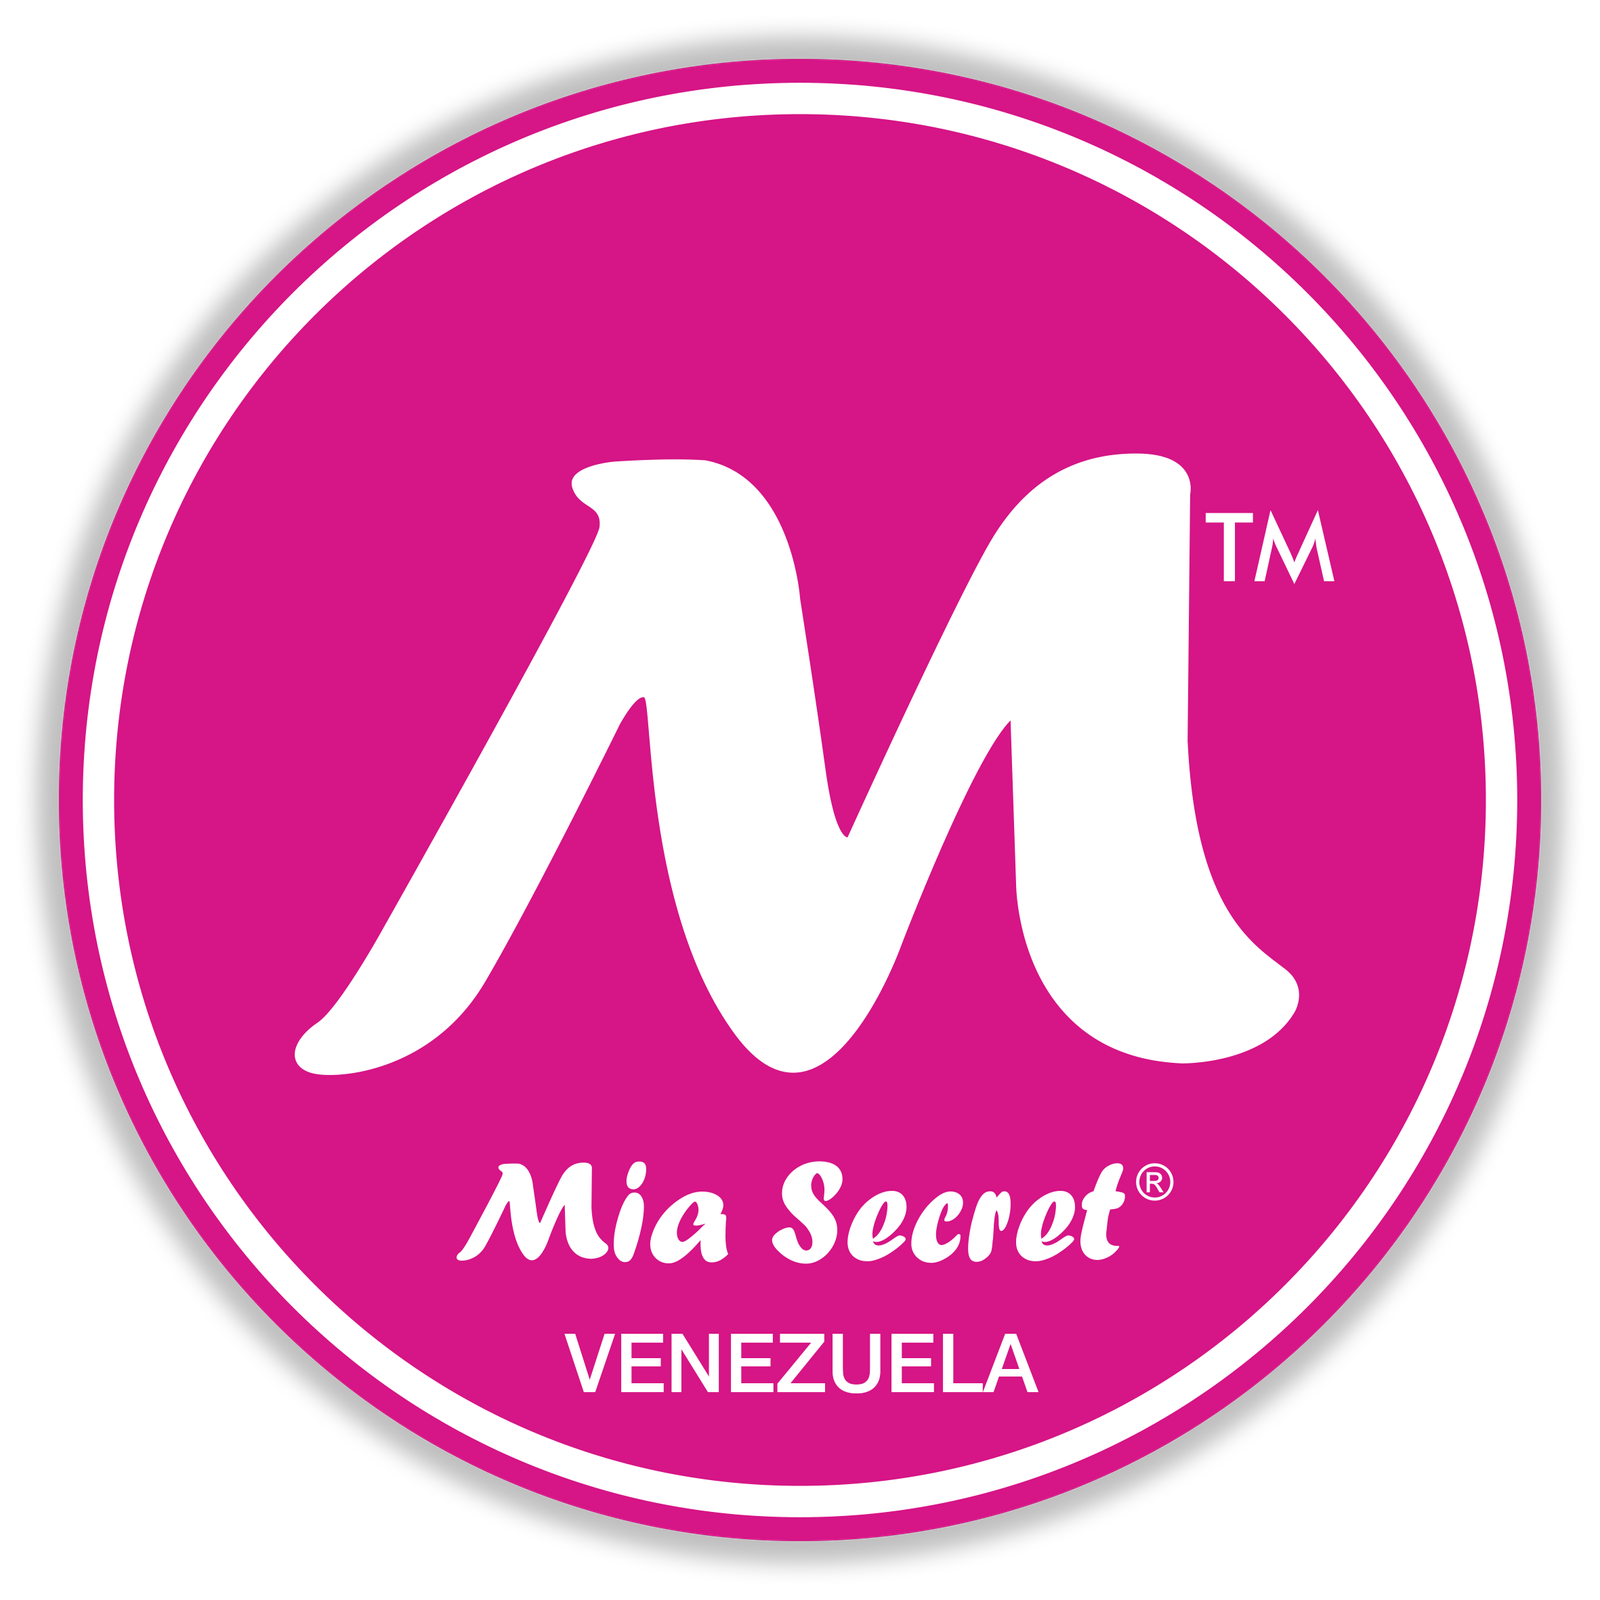 Mia Secret Venezuel